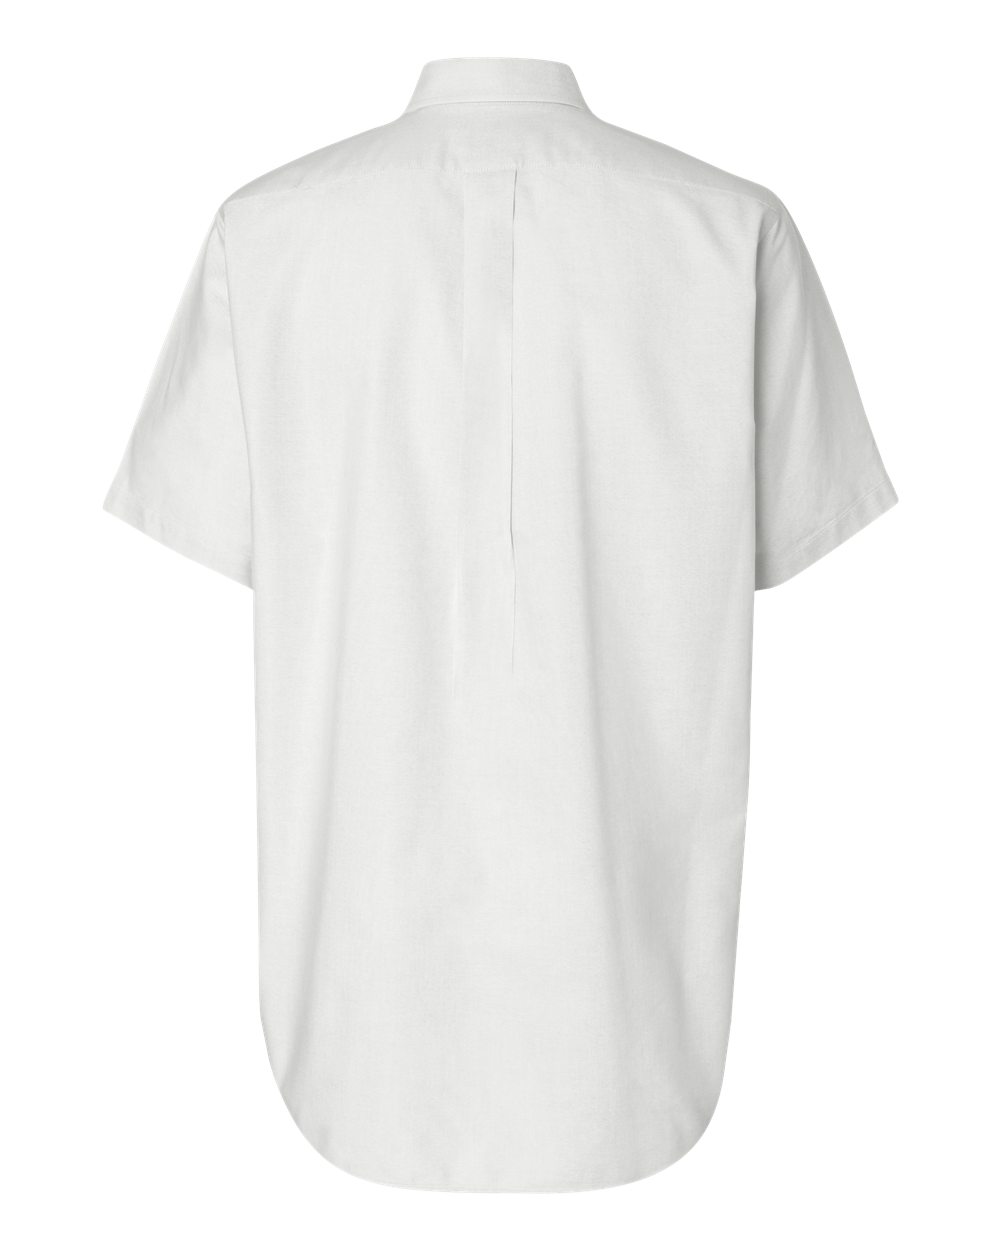 Camiseta blanca manga corta - Vausen